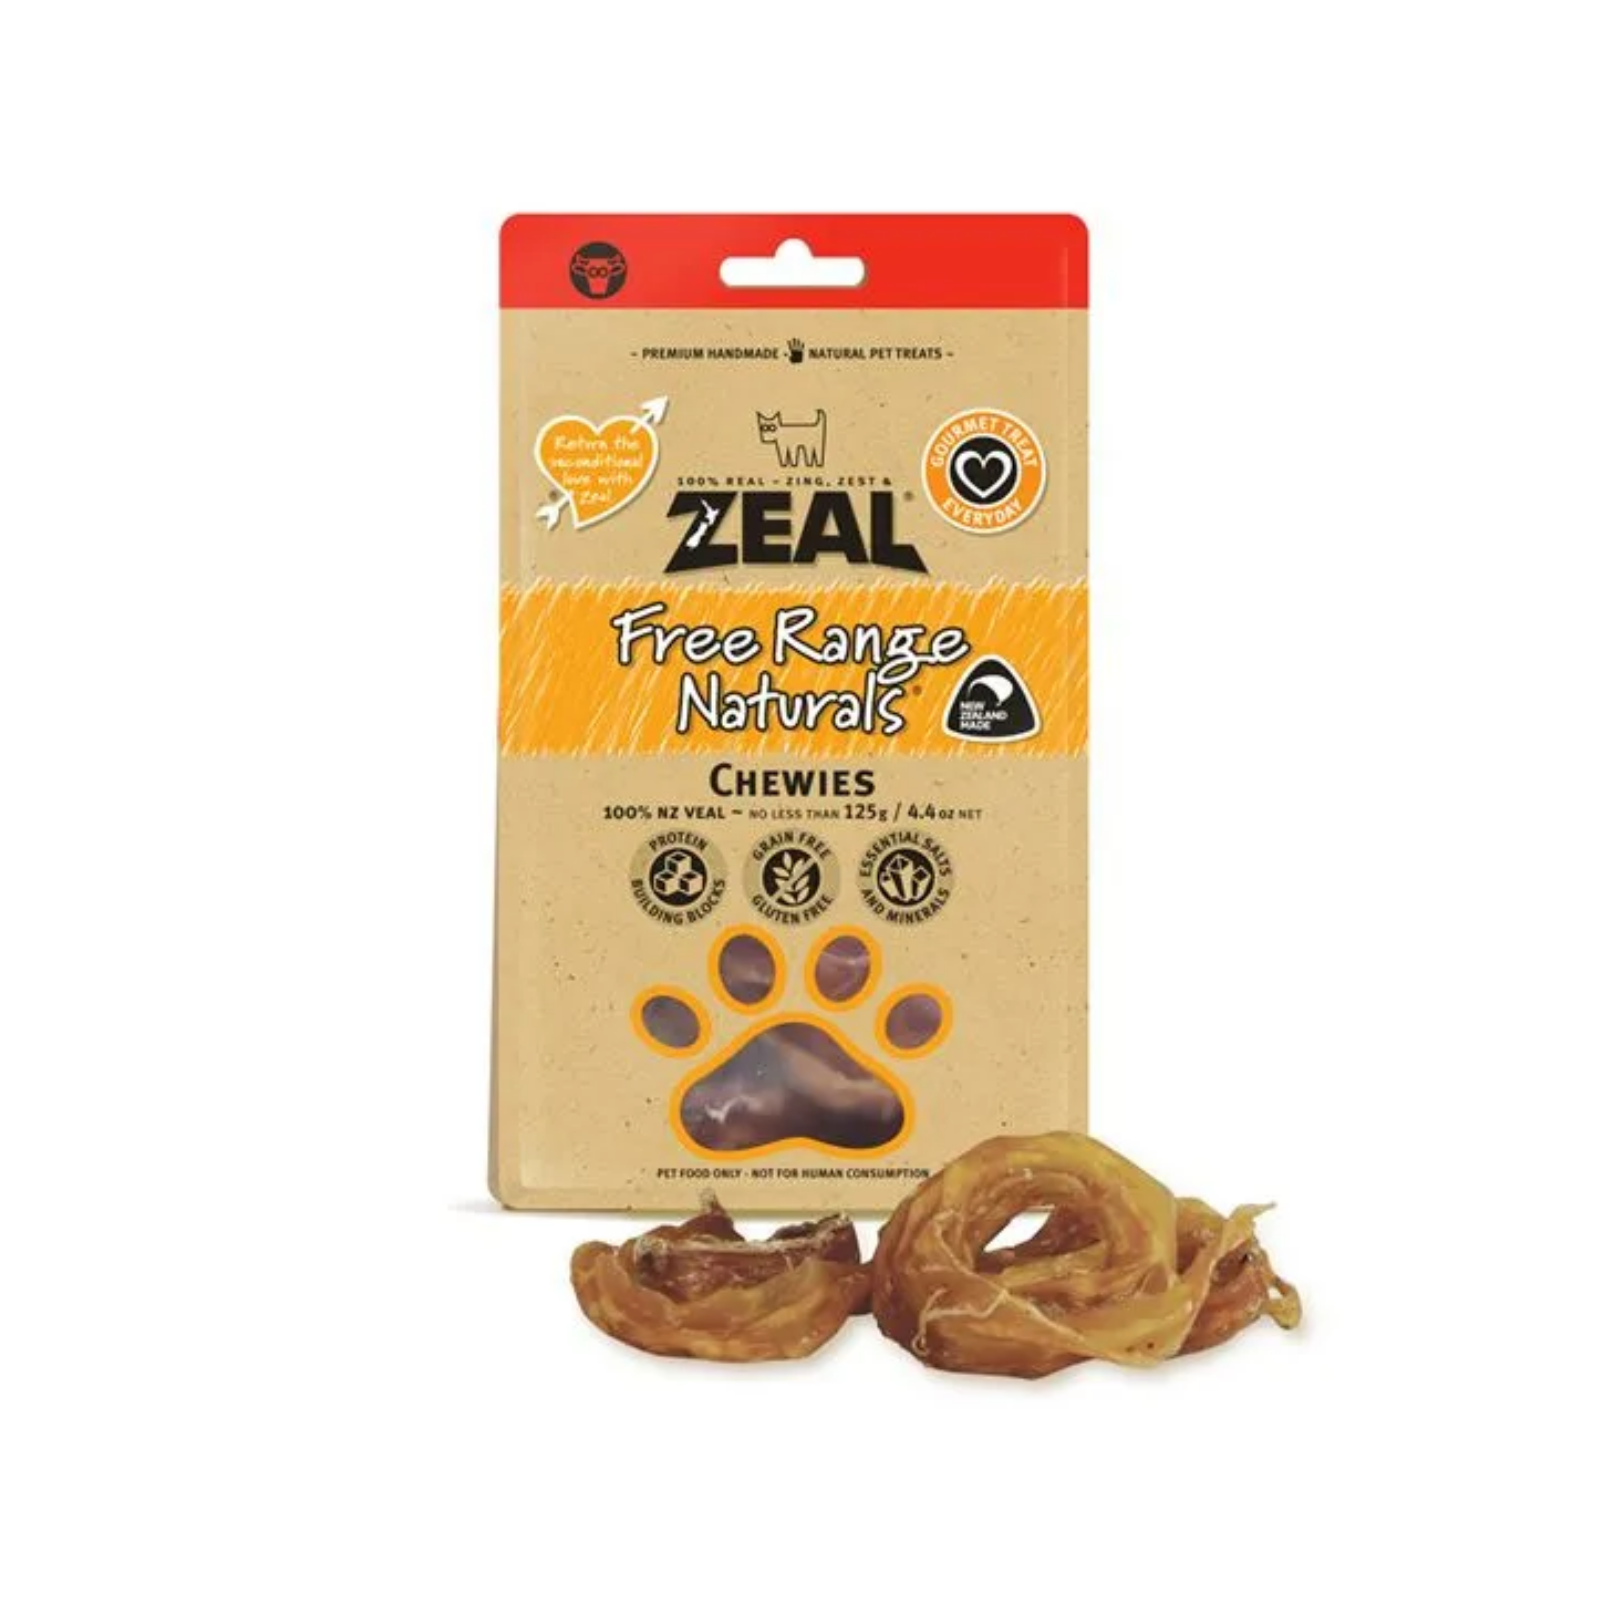 Zeal Free Range Naturals Chewies Dog Treats.